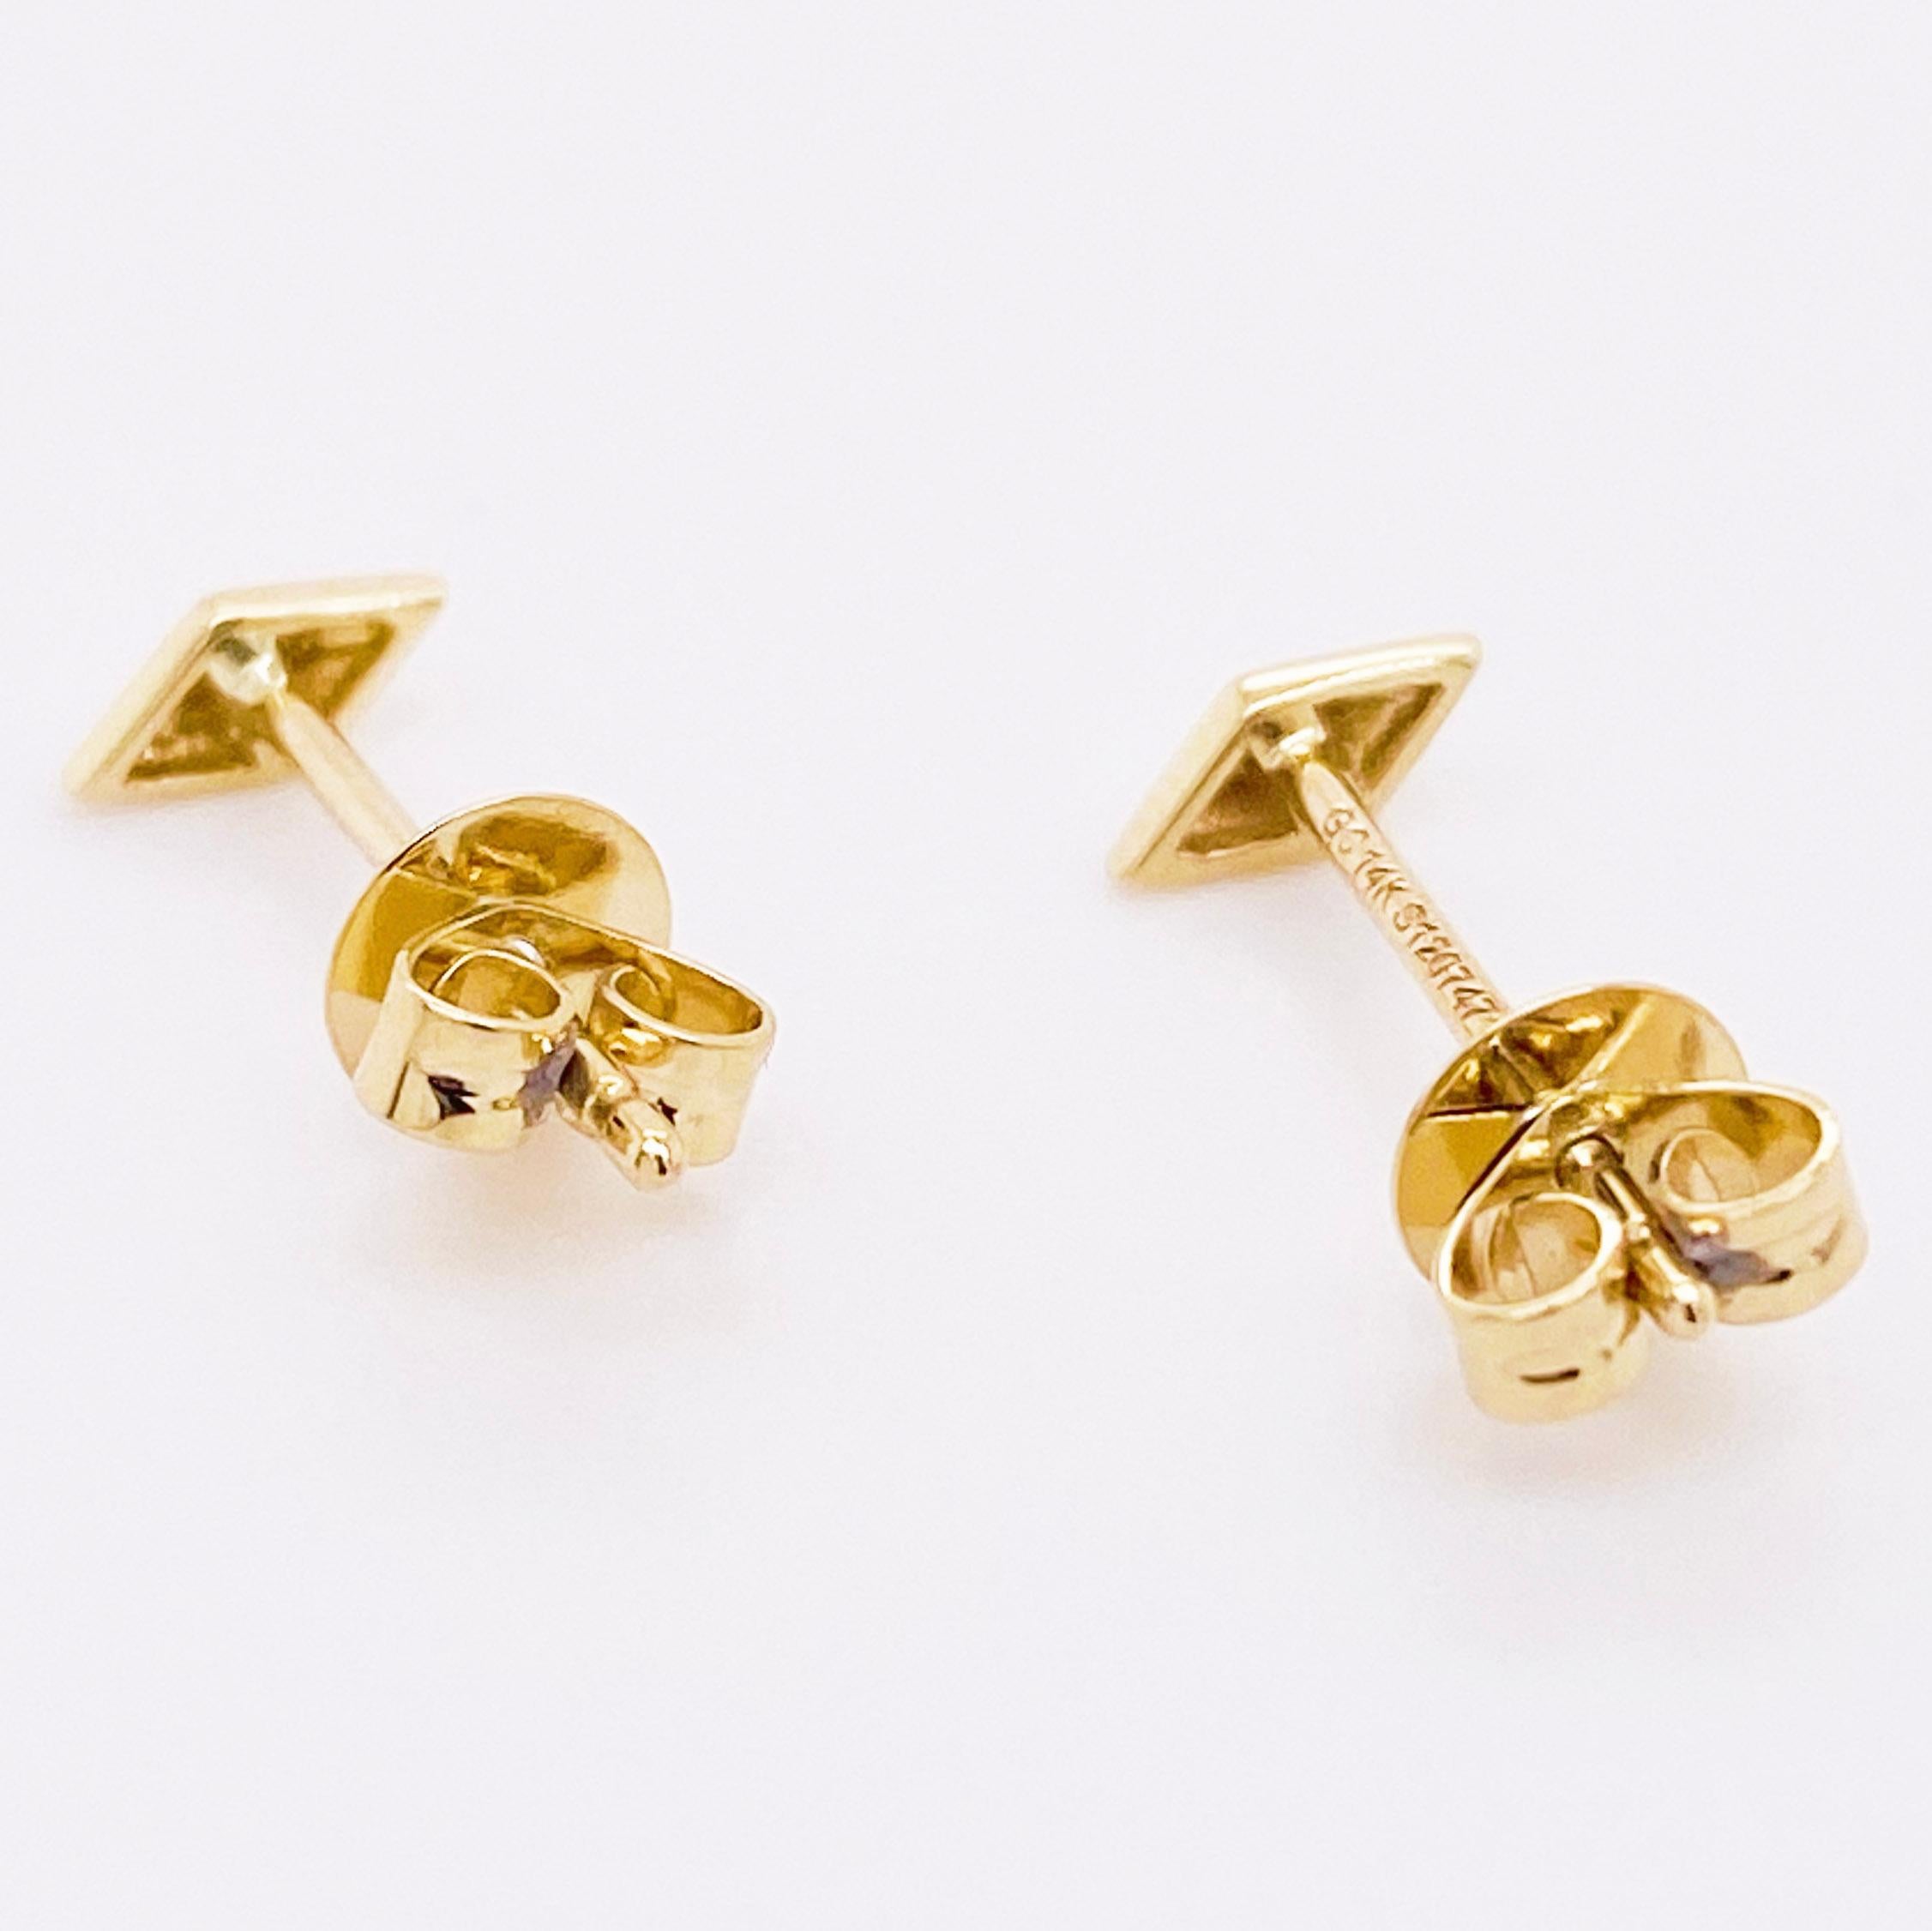 Women's Kite Pyramid Earrings, 14 Karat Yellow Gold Pyramid Stud Earrings, EG14003Y4JJJ For Sale